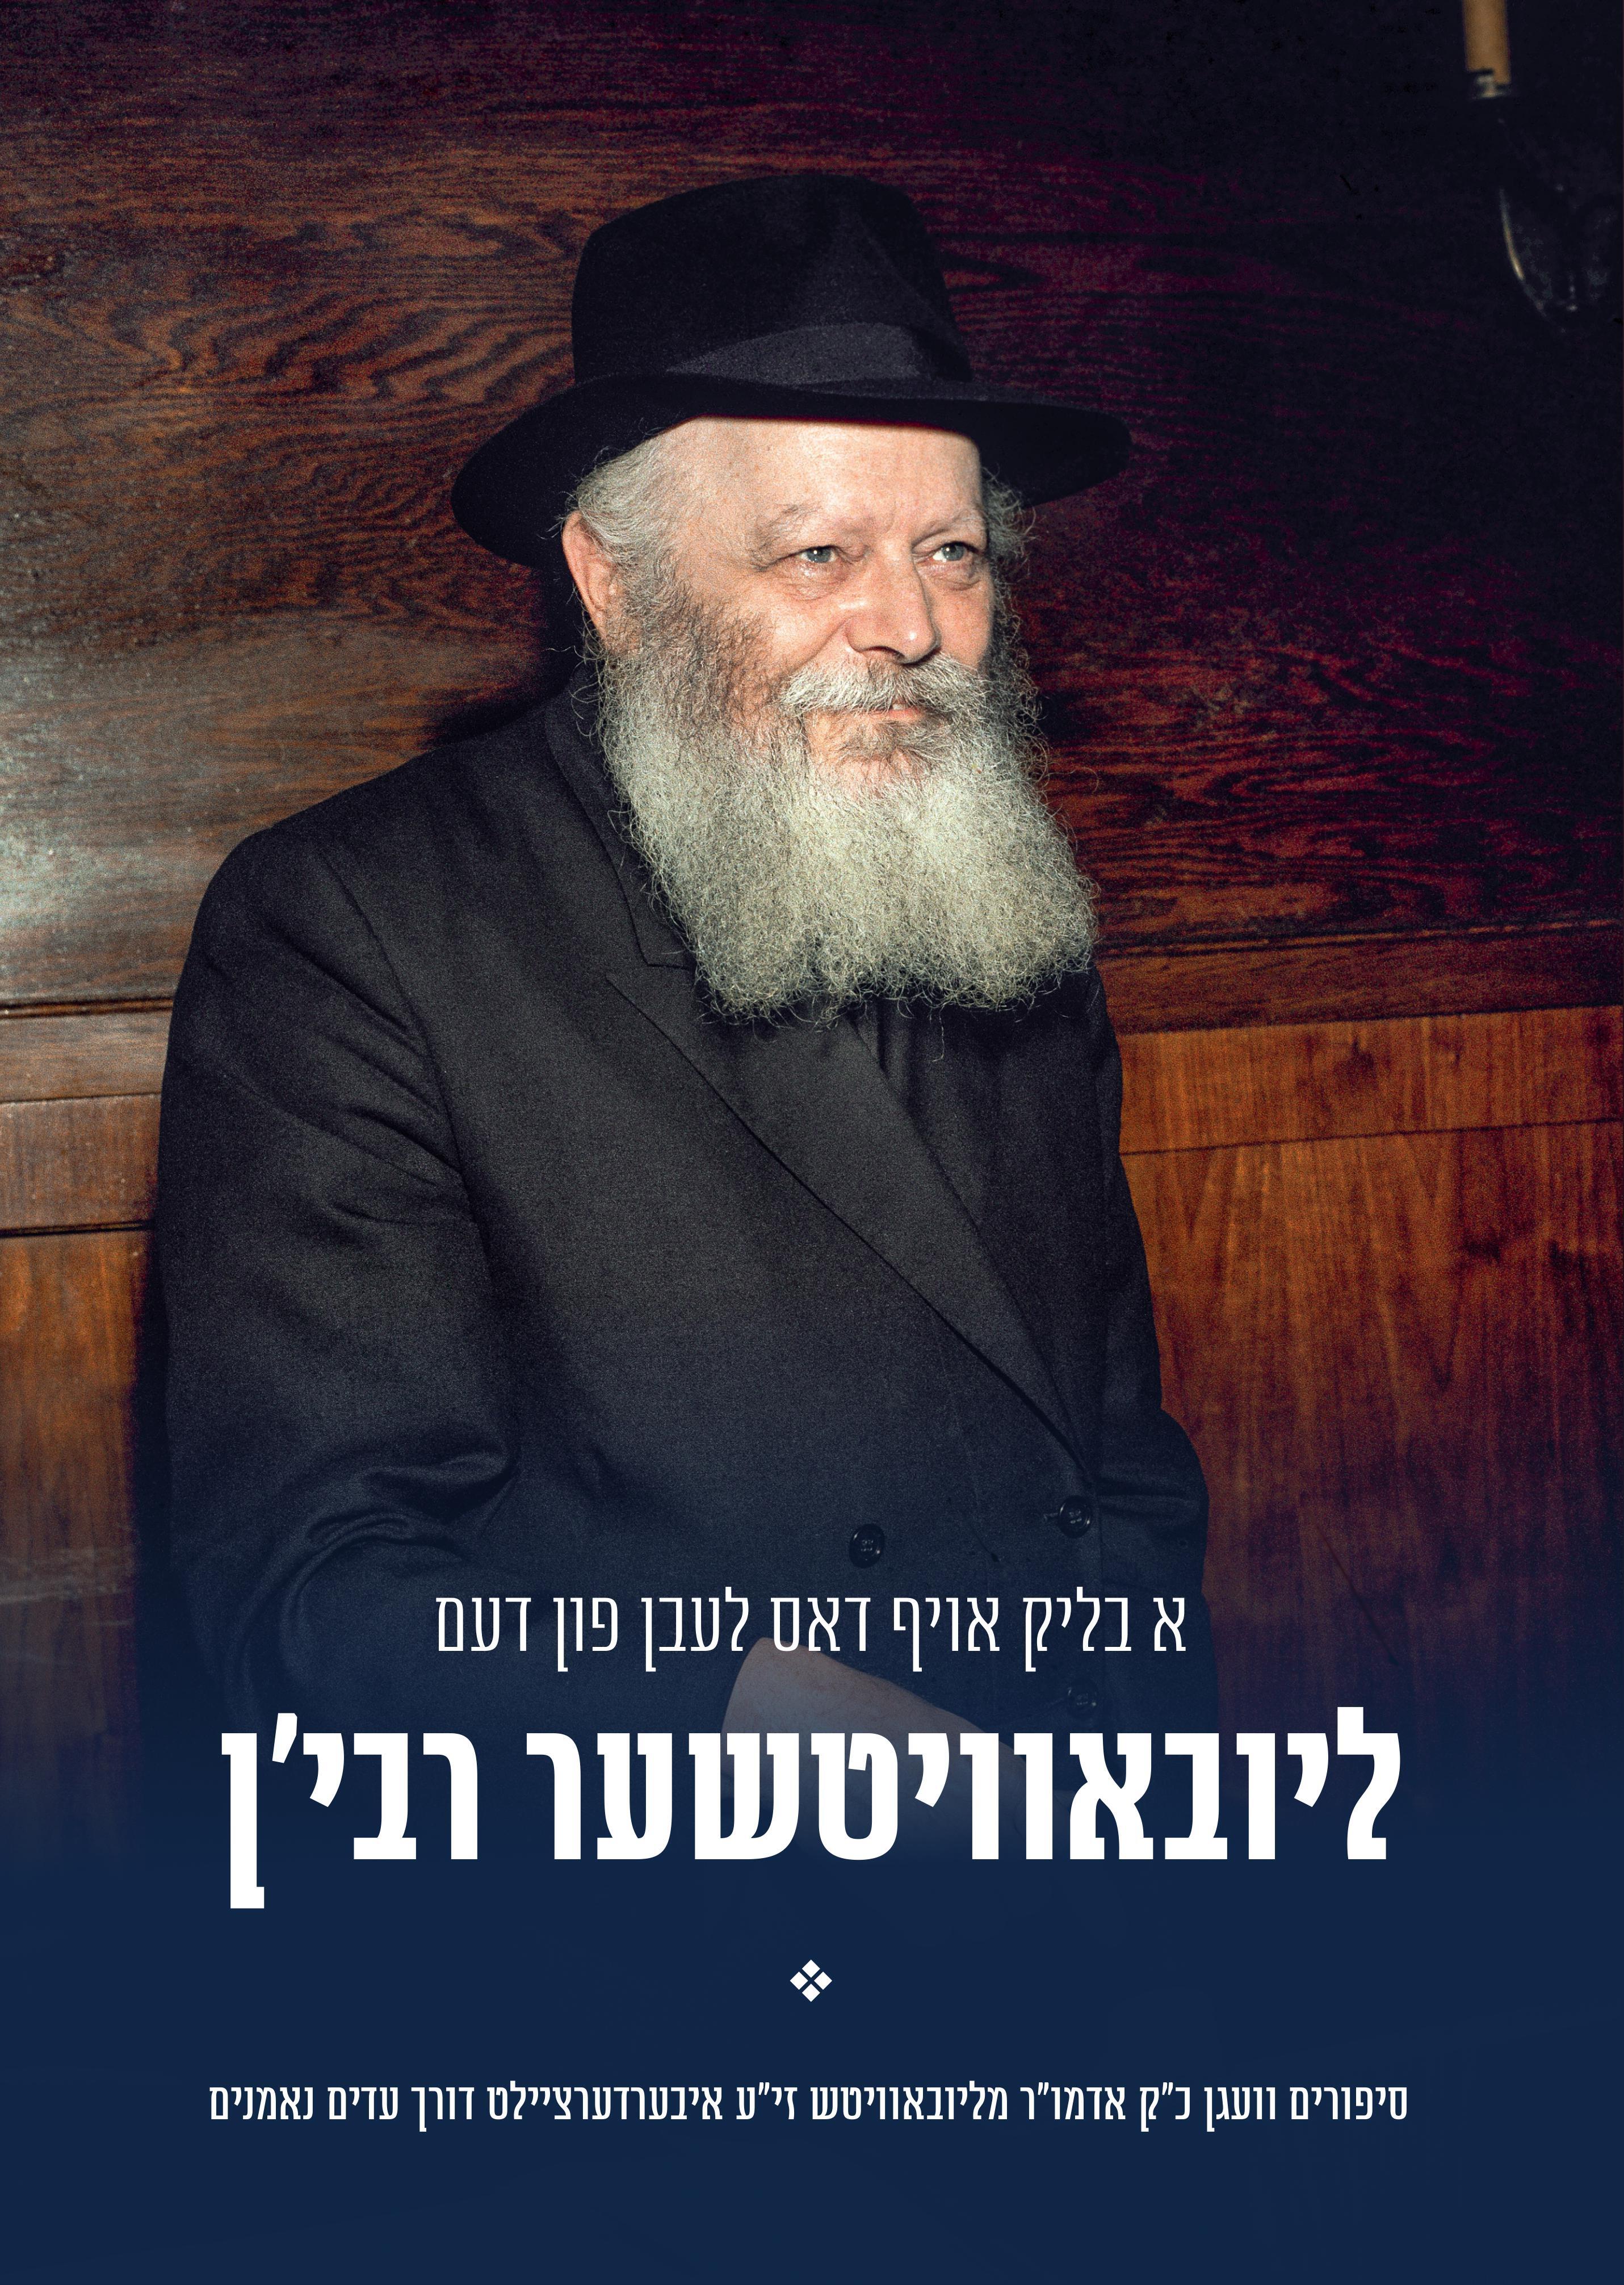 A Blick Oif Dus Leben Fun Dem Lubavitcher Rebbe [Yiddish] (Video)